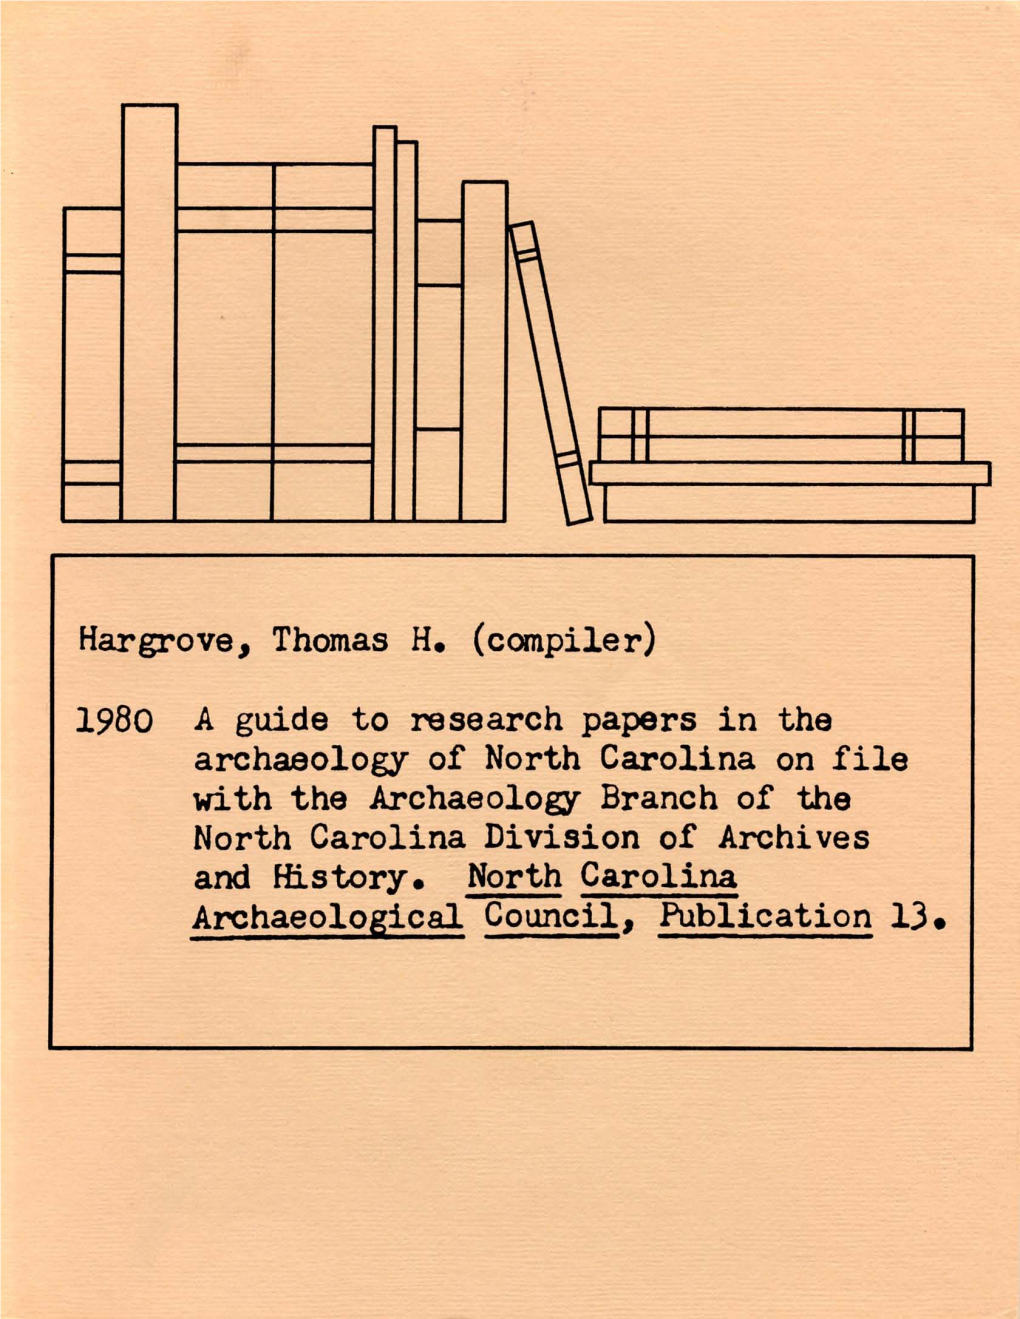 Hargrove, Thomas H. (Compiler)